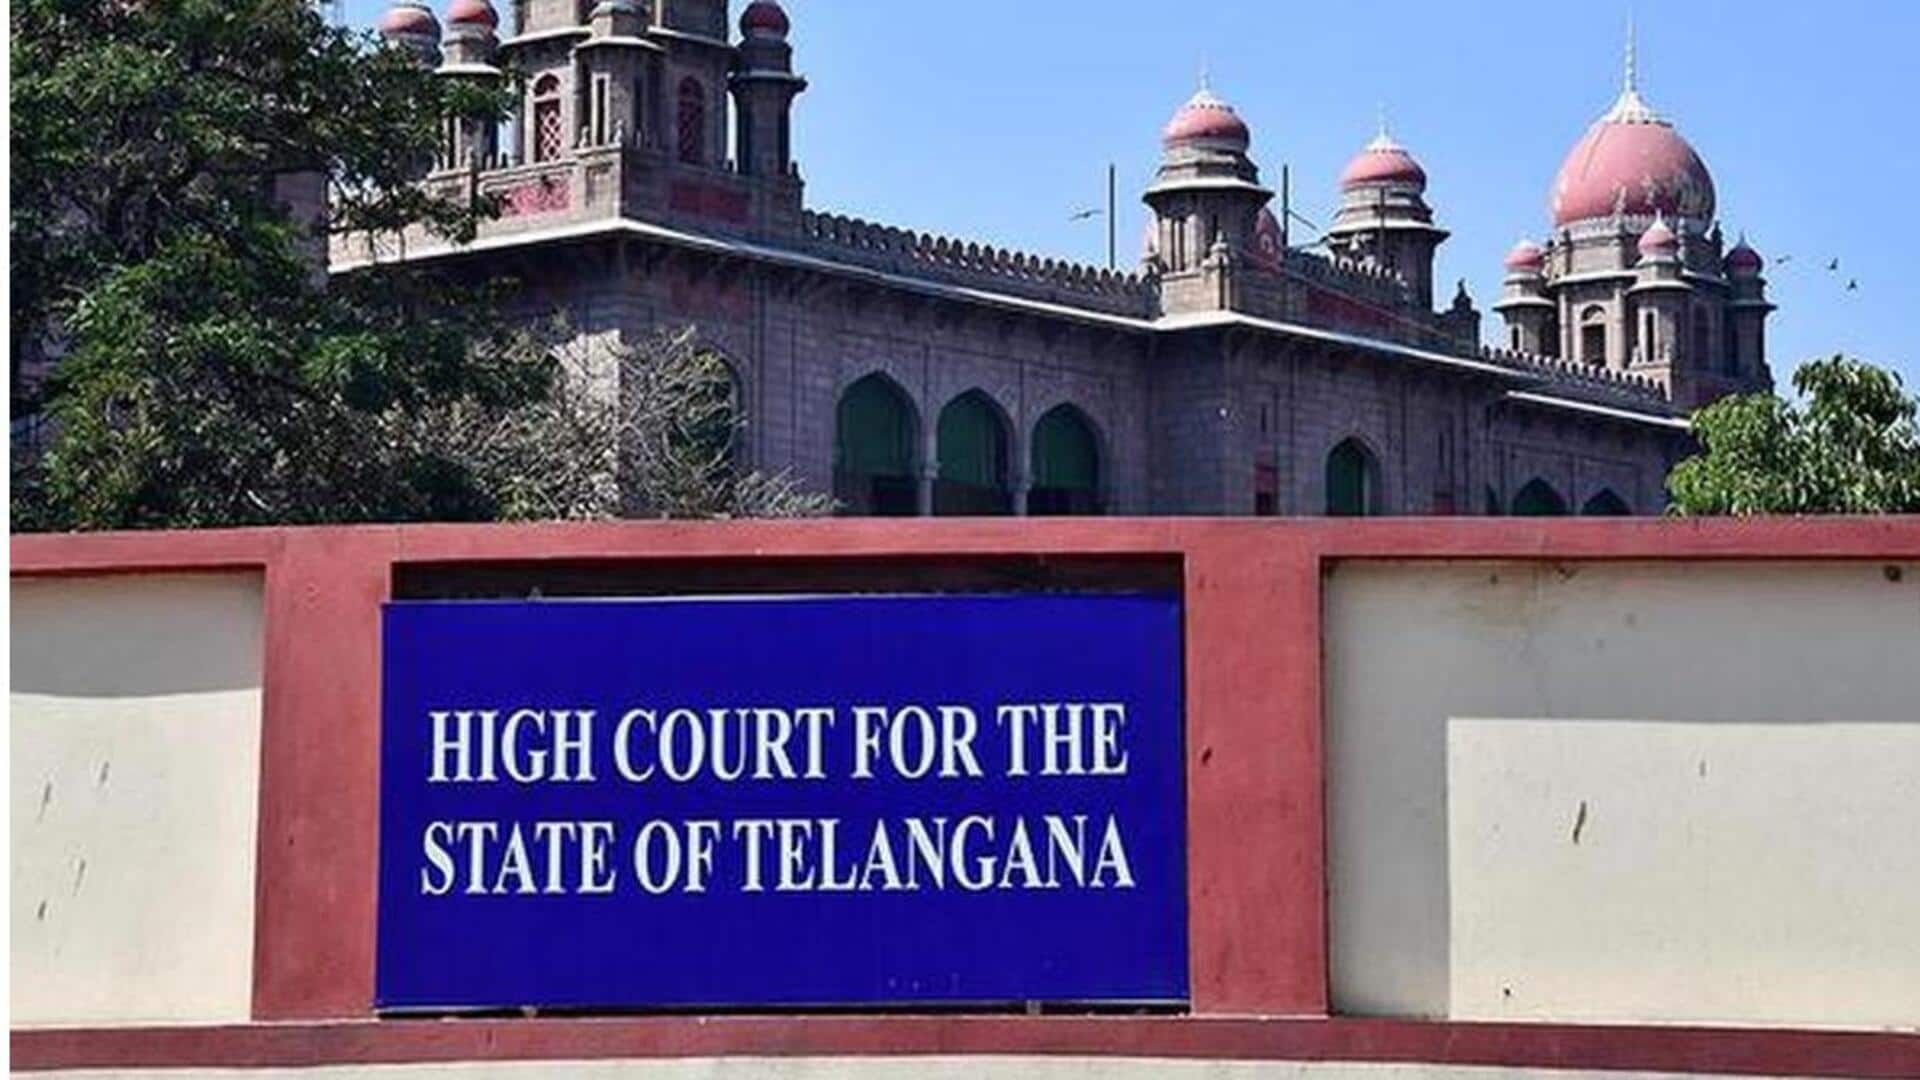 Telangana High Court: కేబినెట్ సిఫార్సును గవర్నర్ తిరస్కరించలేరు: హైకోర్టు 